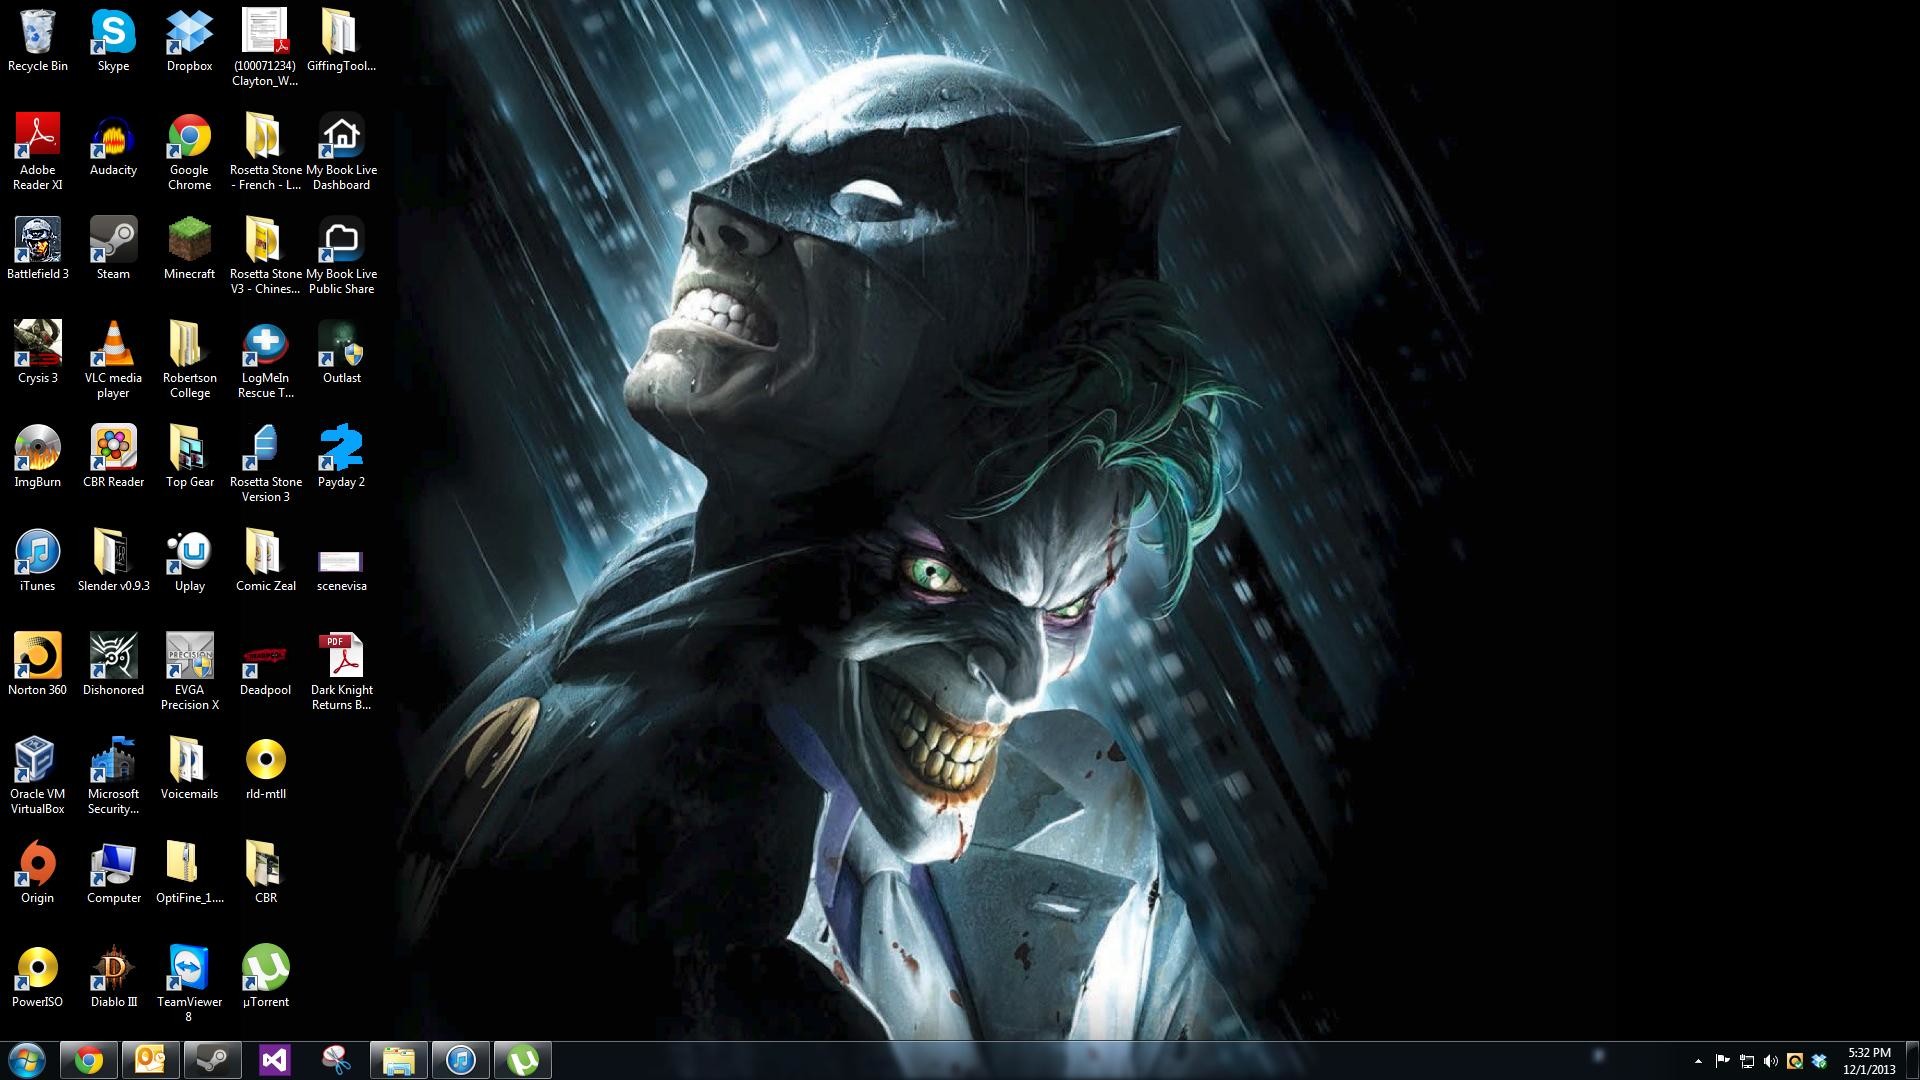 1920x1080 My new desktop background, from The Dark Knight Returns OST .